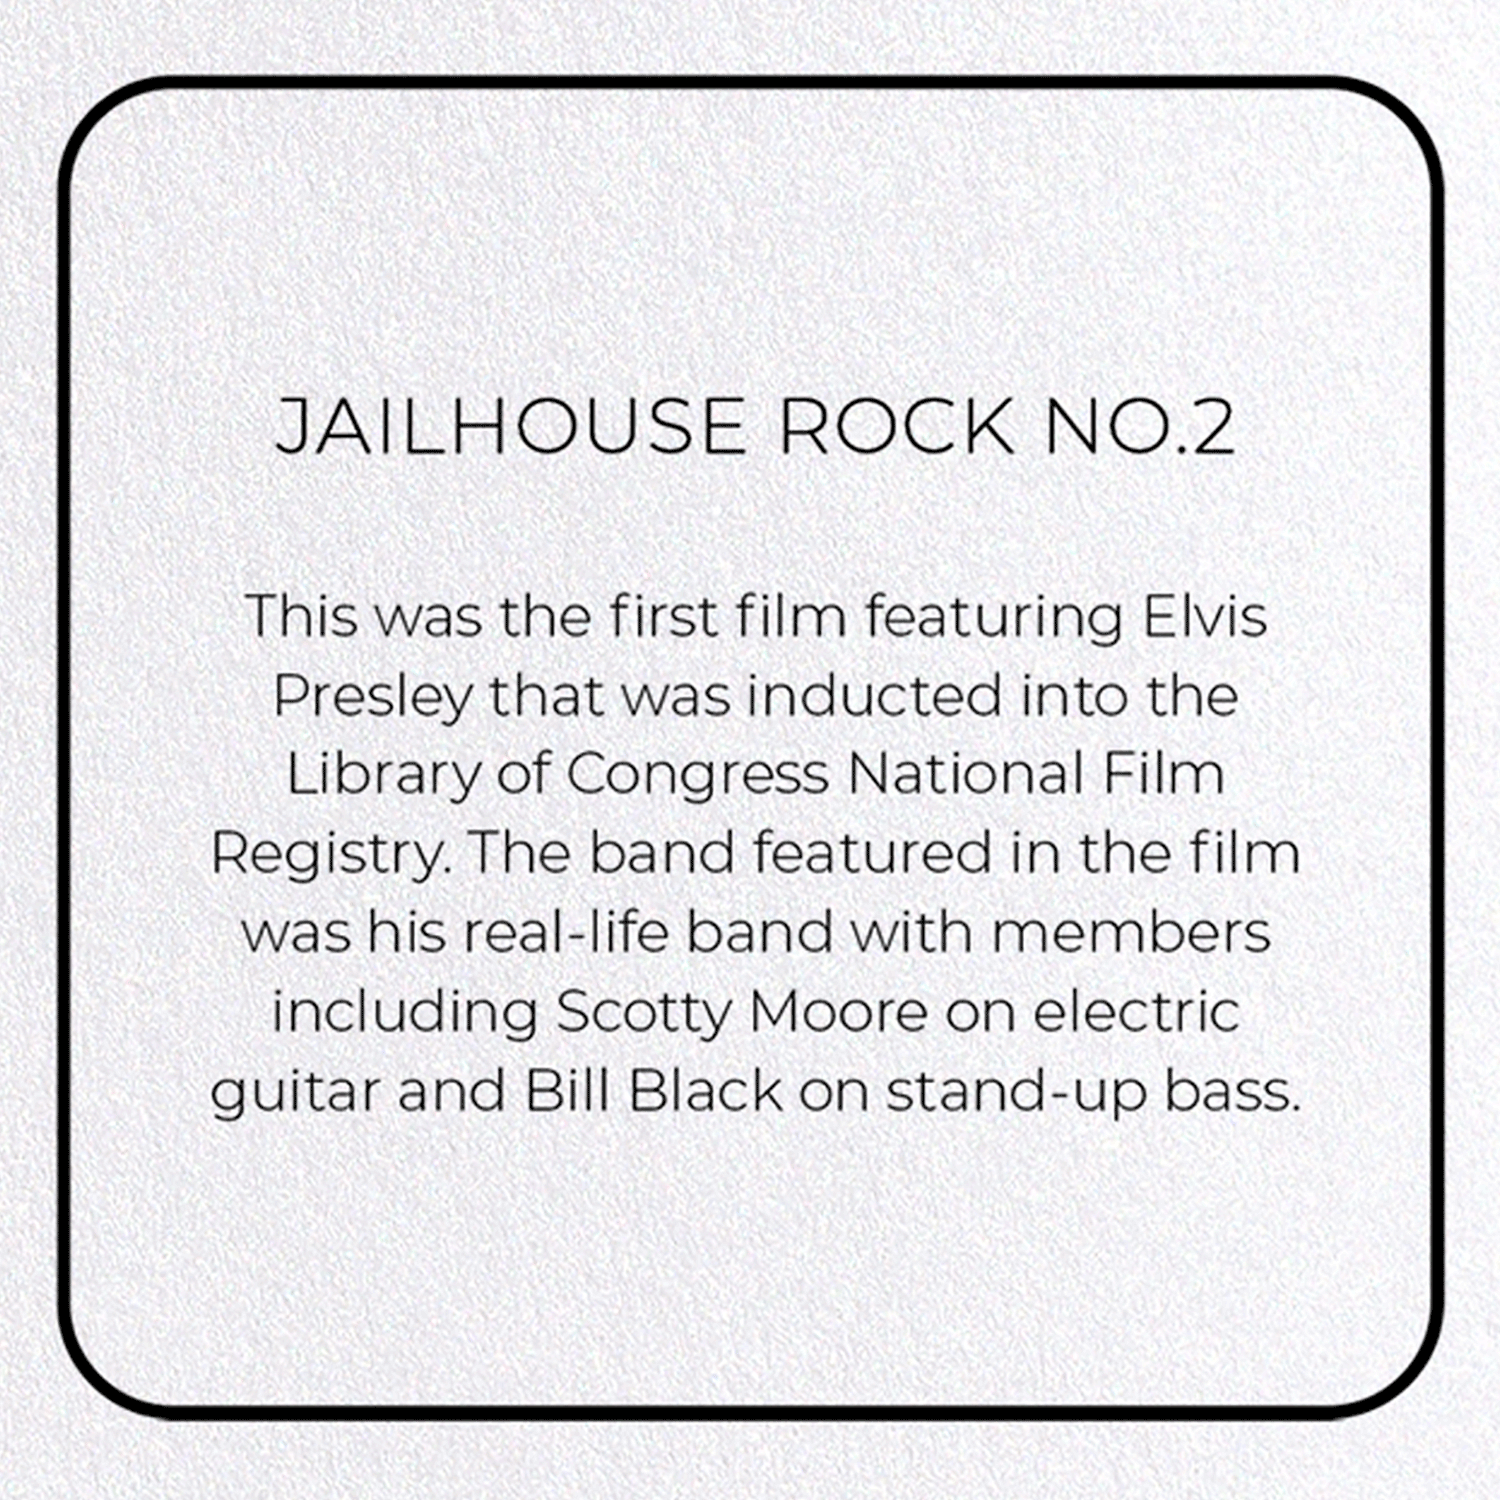 JAILHOUSE ROCK NO.2: Photo Greeting Card